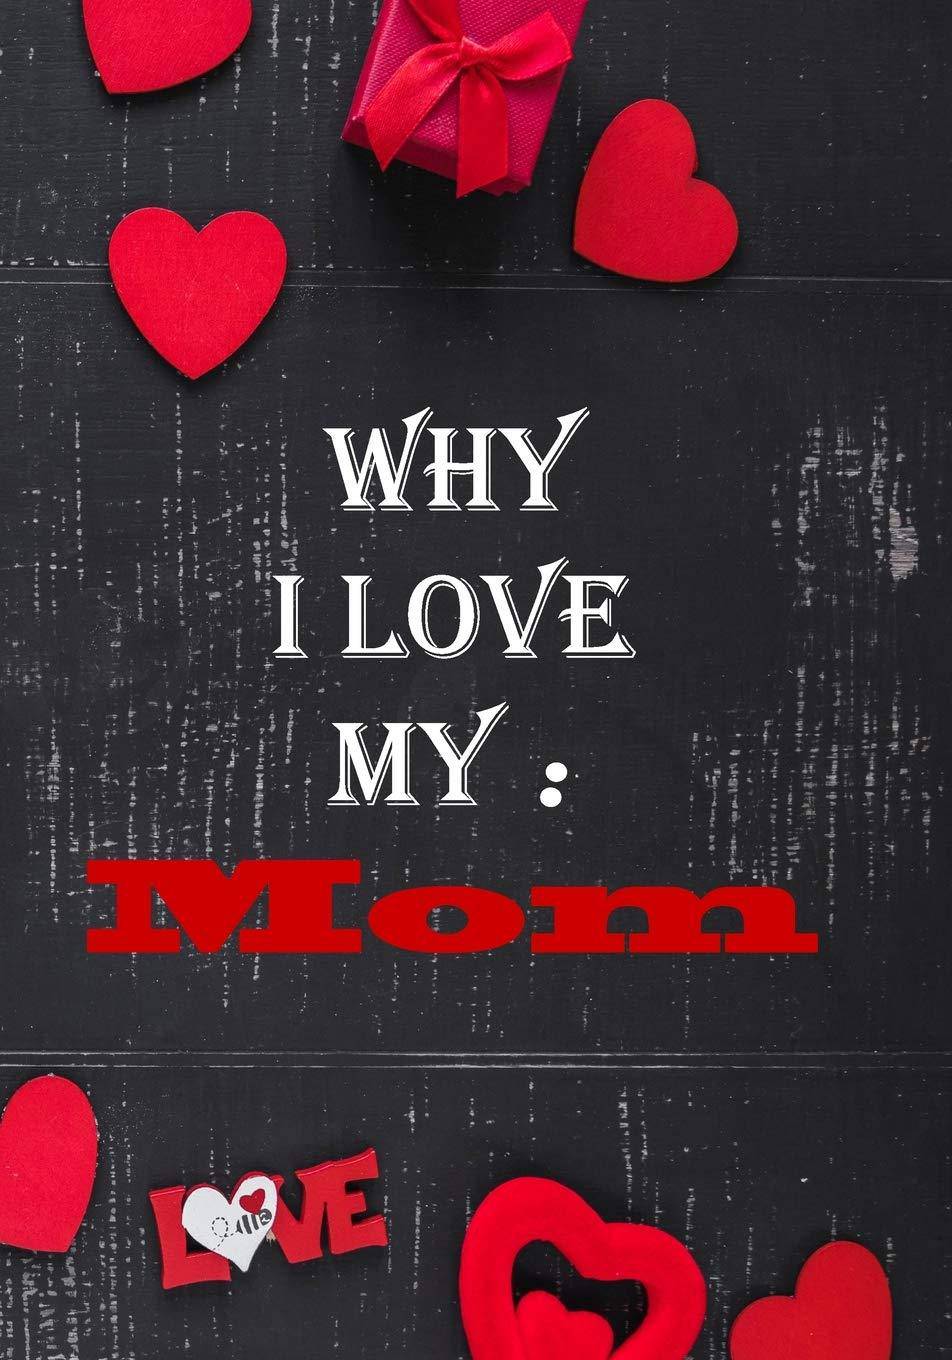 Why I Love My Mom - SureShot Books Publishing LLC